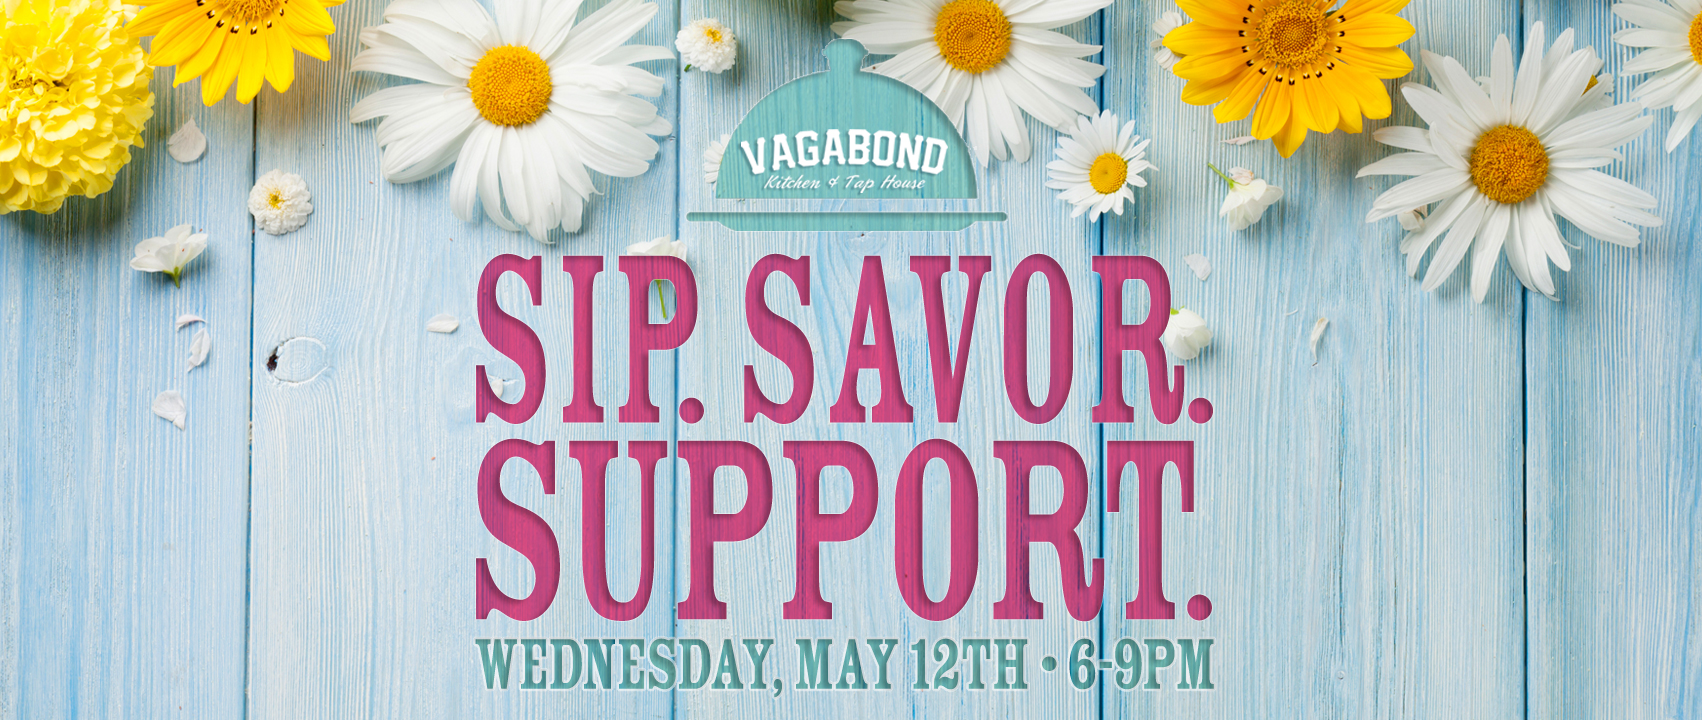 Gilda's Club to hold 'Sip. Savor. Support.' event at Vagabond DOWNBEACH